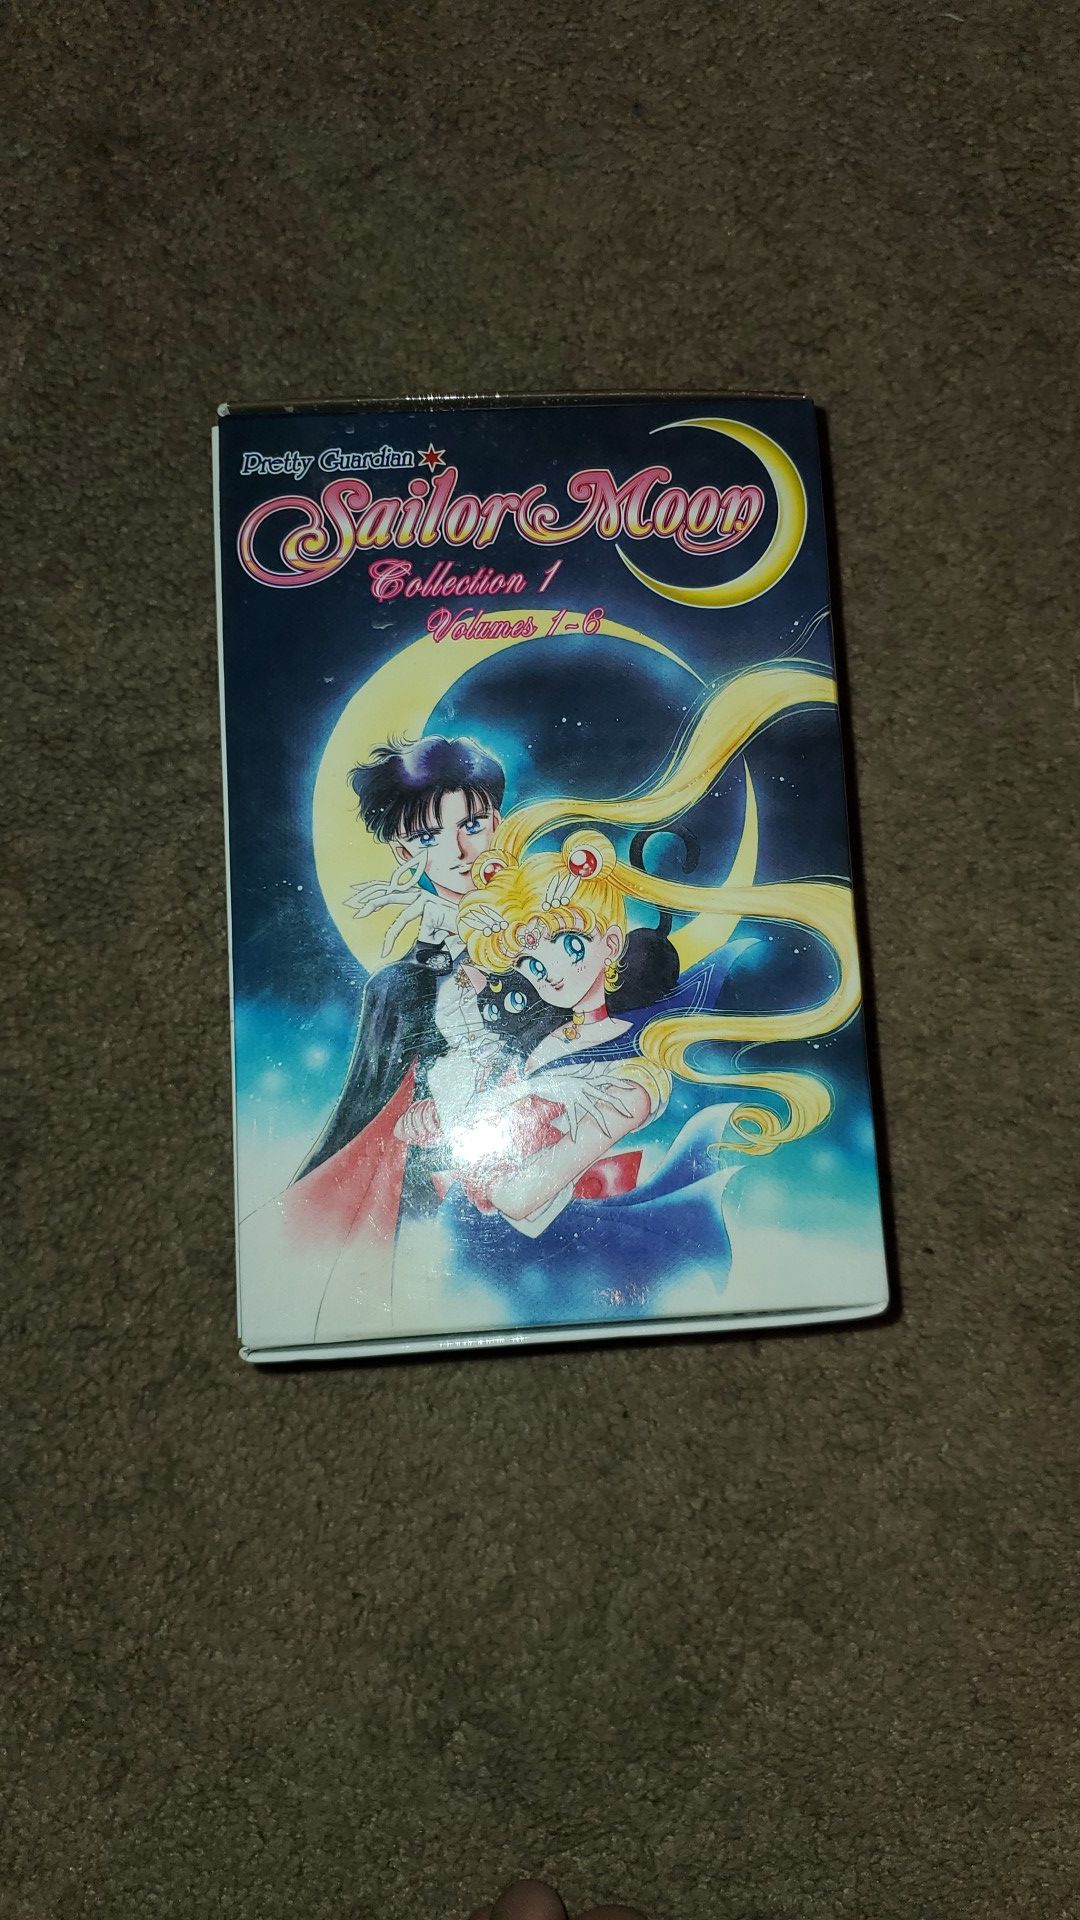 Sailor Moon Collection 1 (1-6) box set